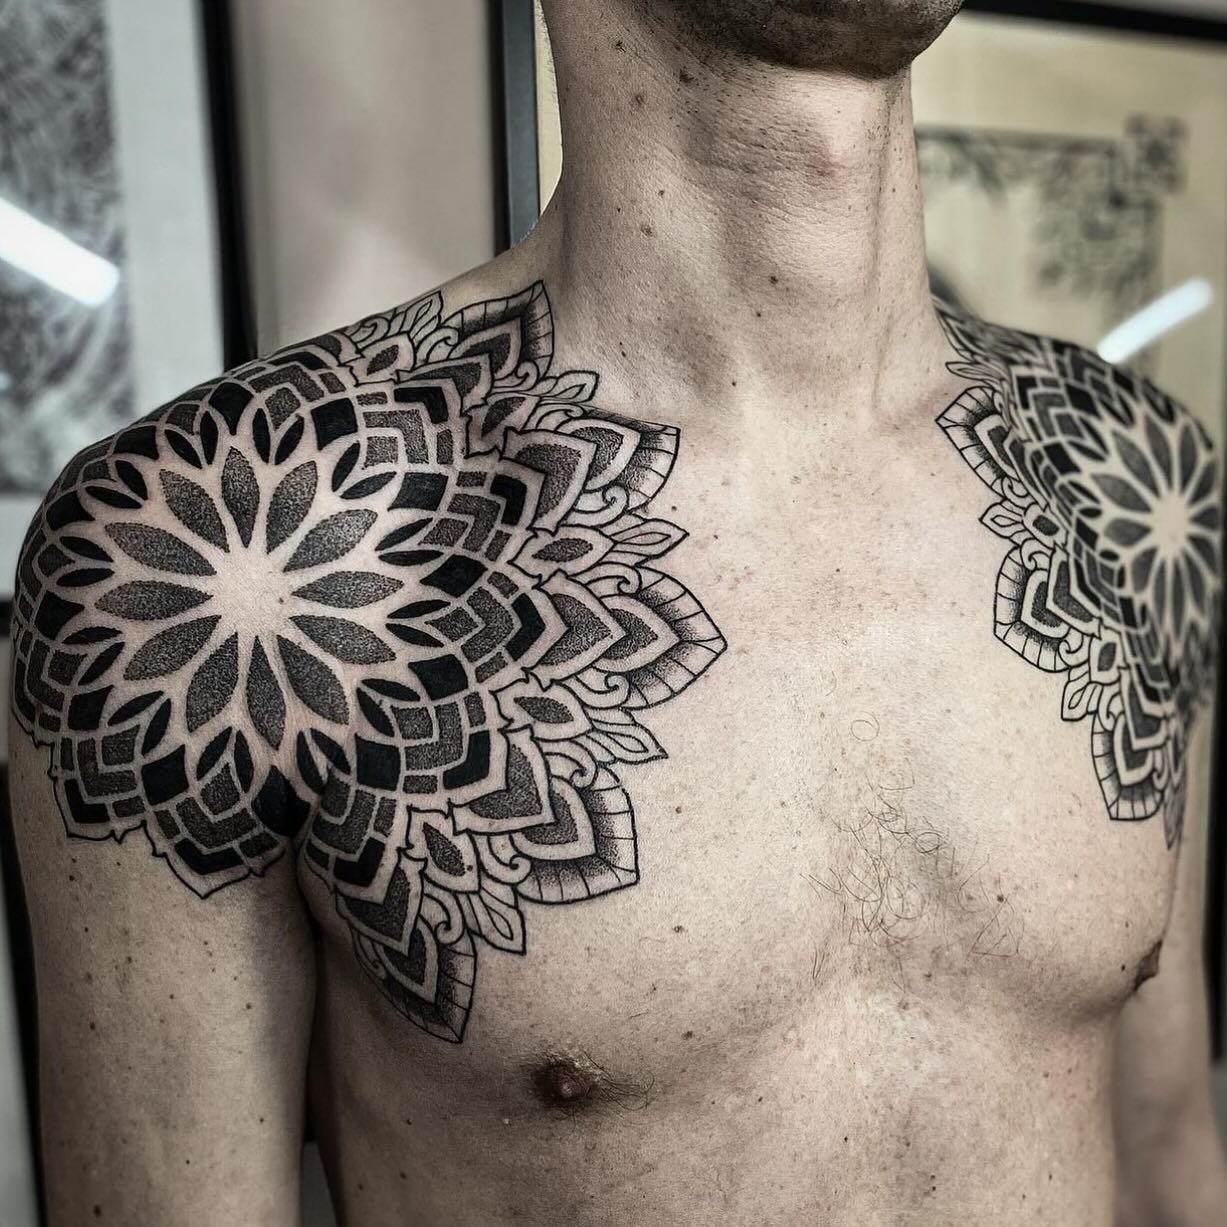 How about these matching shoulder mandalas by @ale_vitale_tattoo #mandalamondays